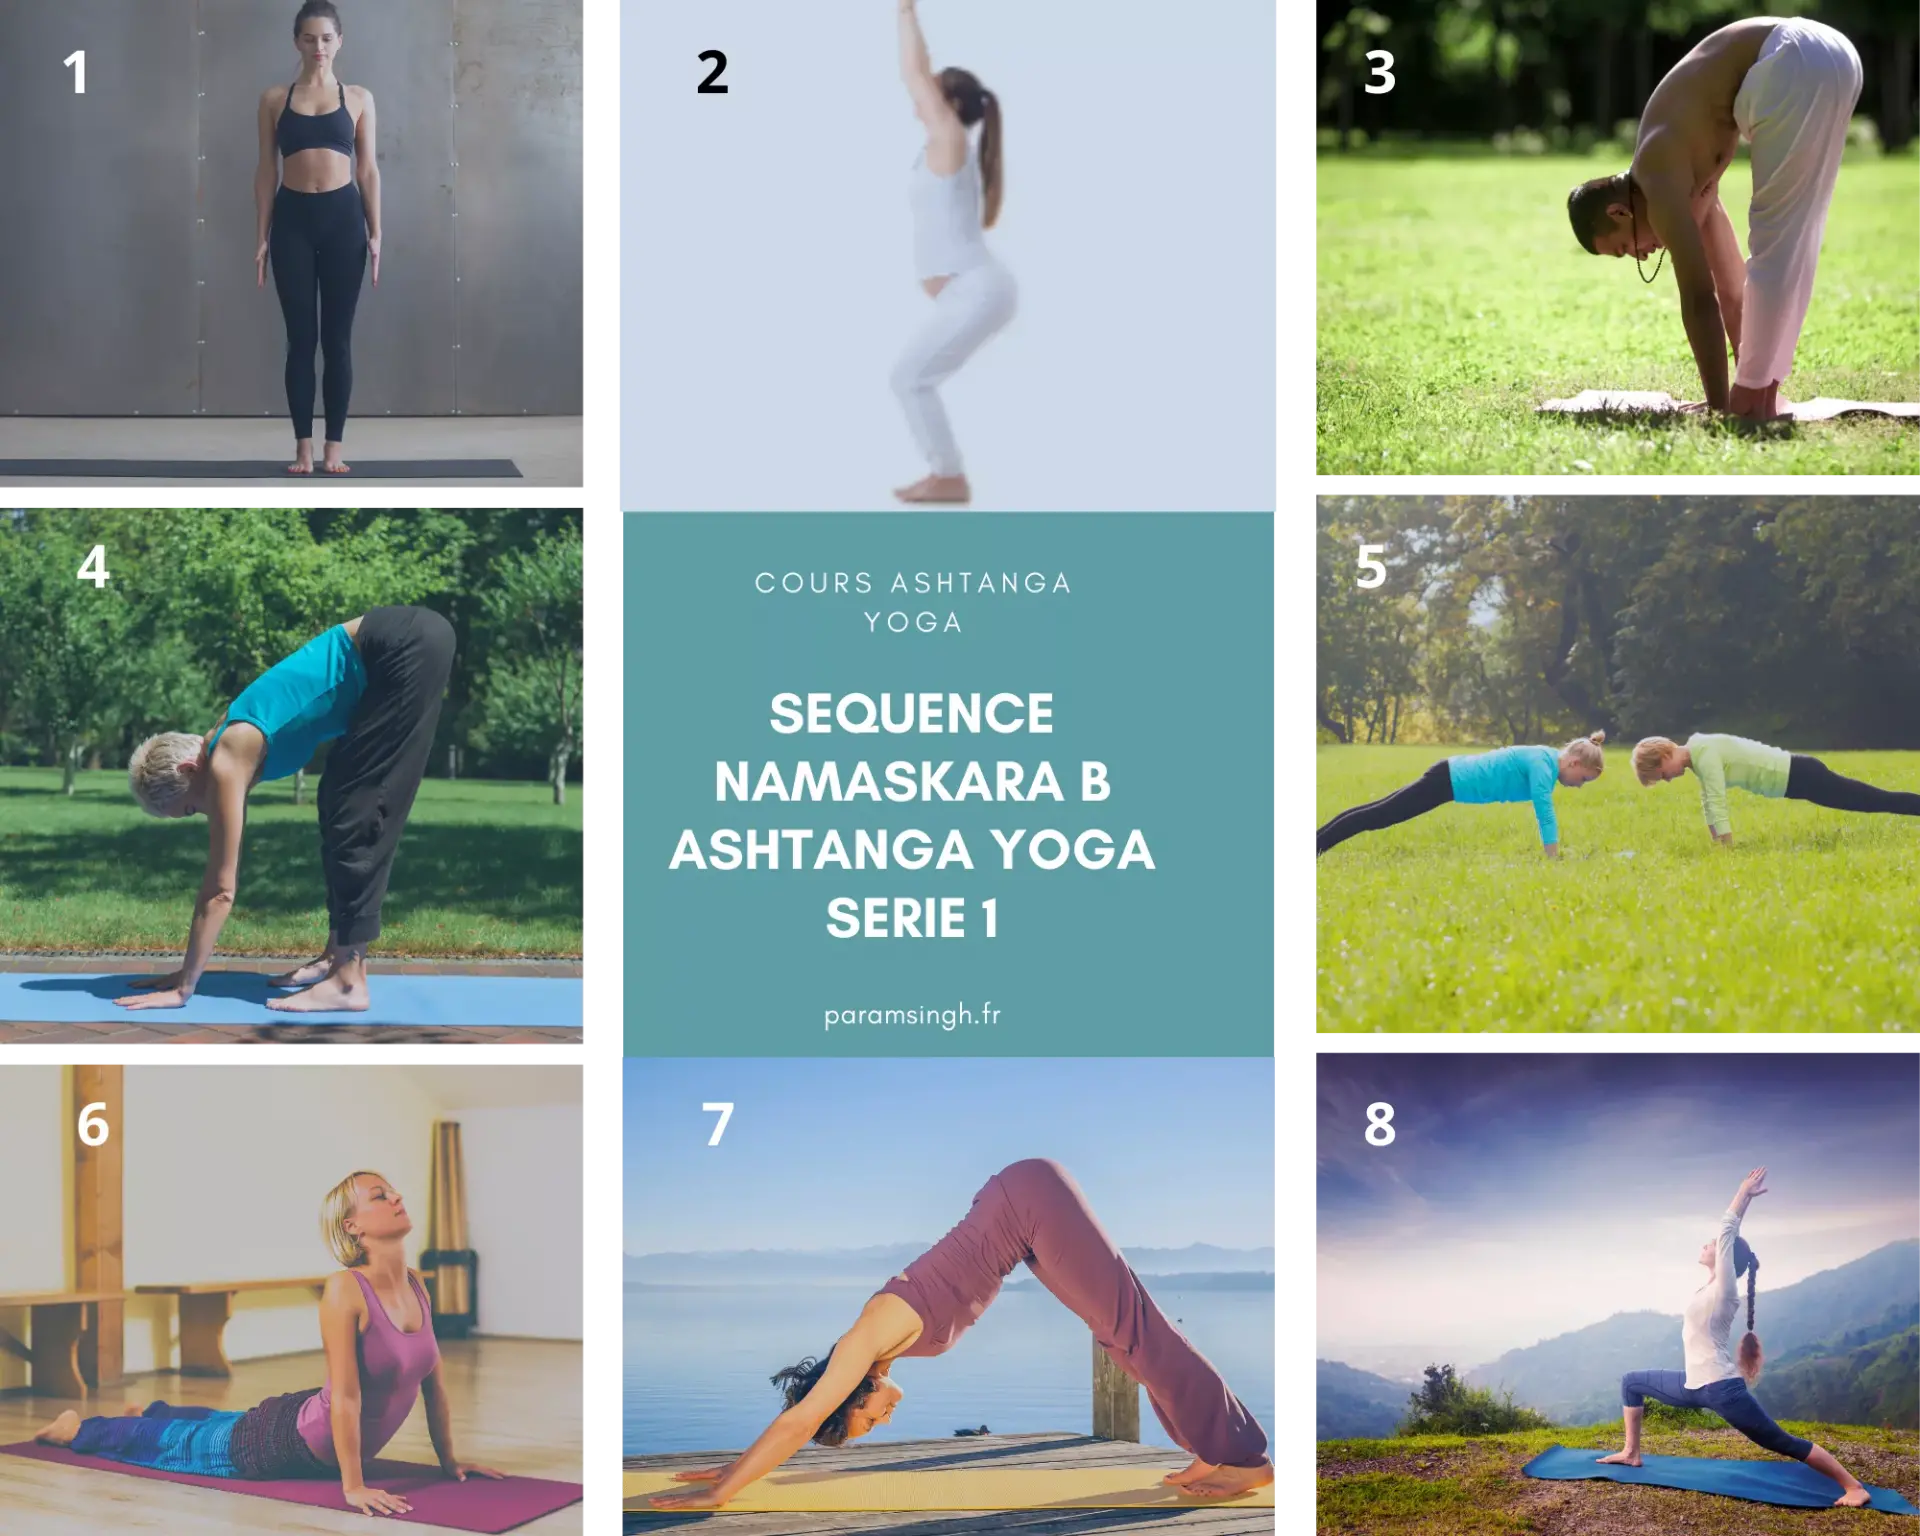 Sequence namaskara b ashtanga yoga serie 1